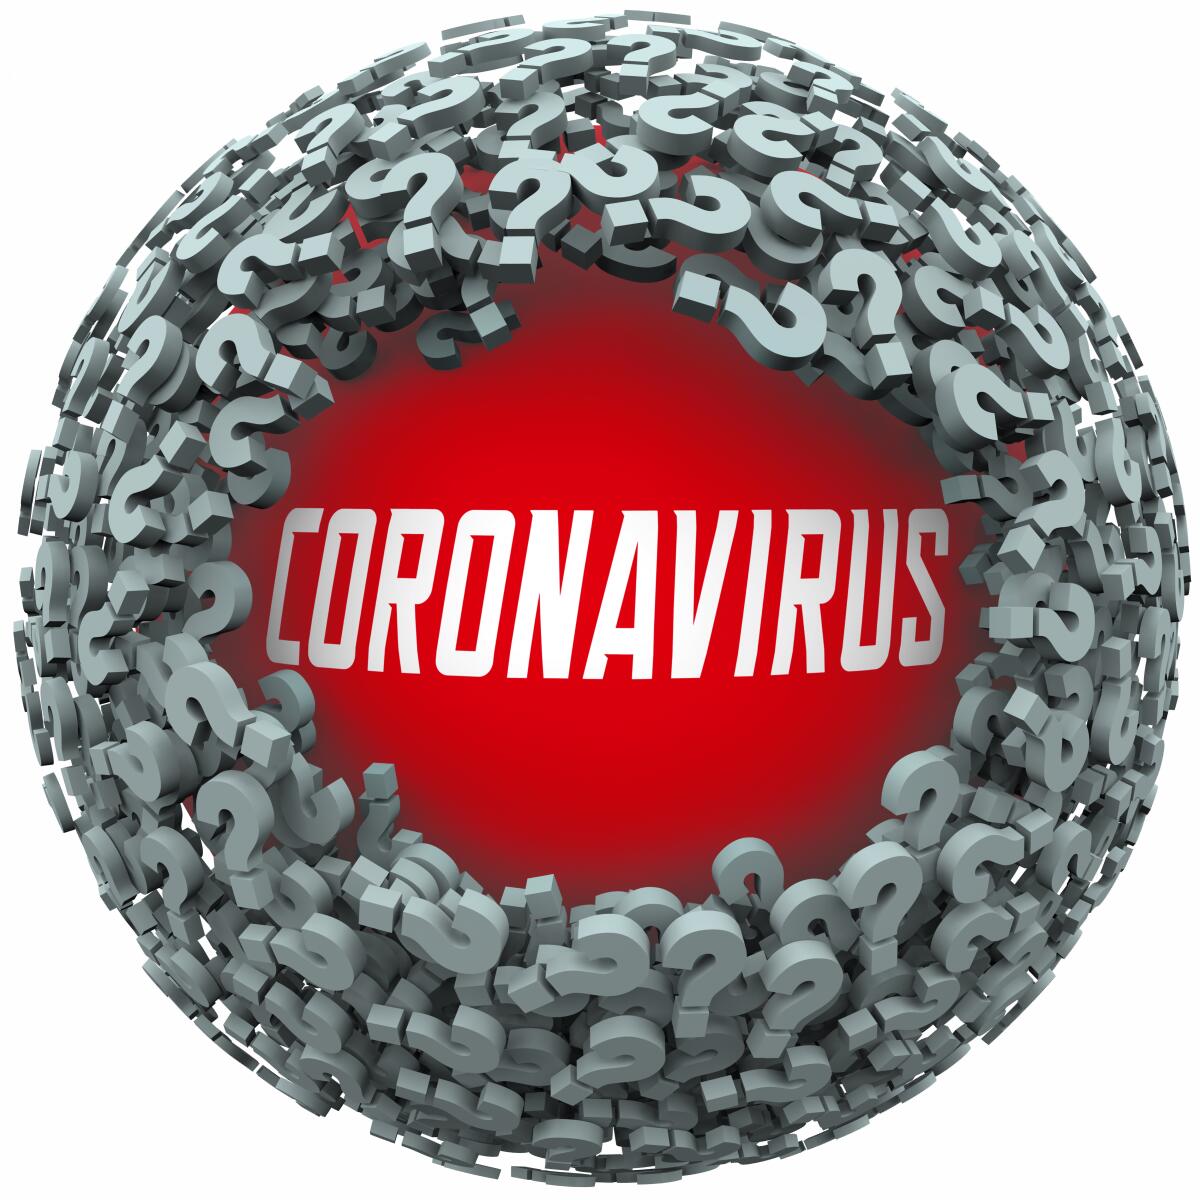 Coronavirus questions illustration